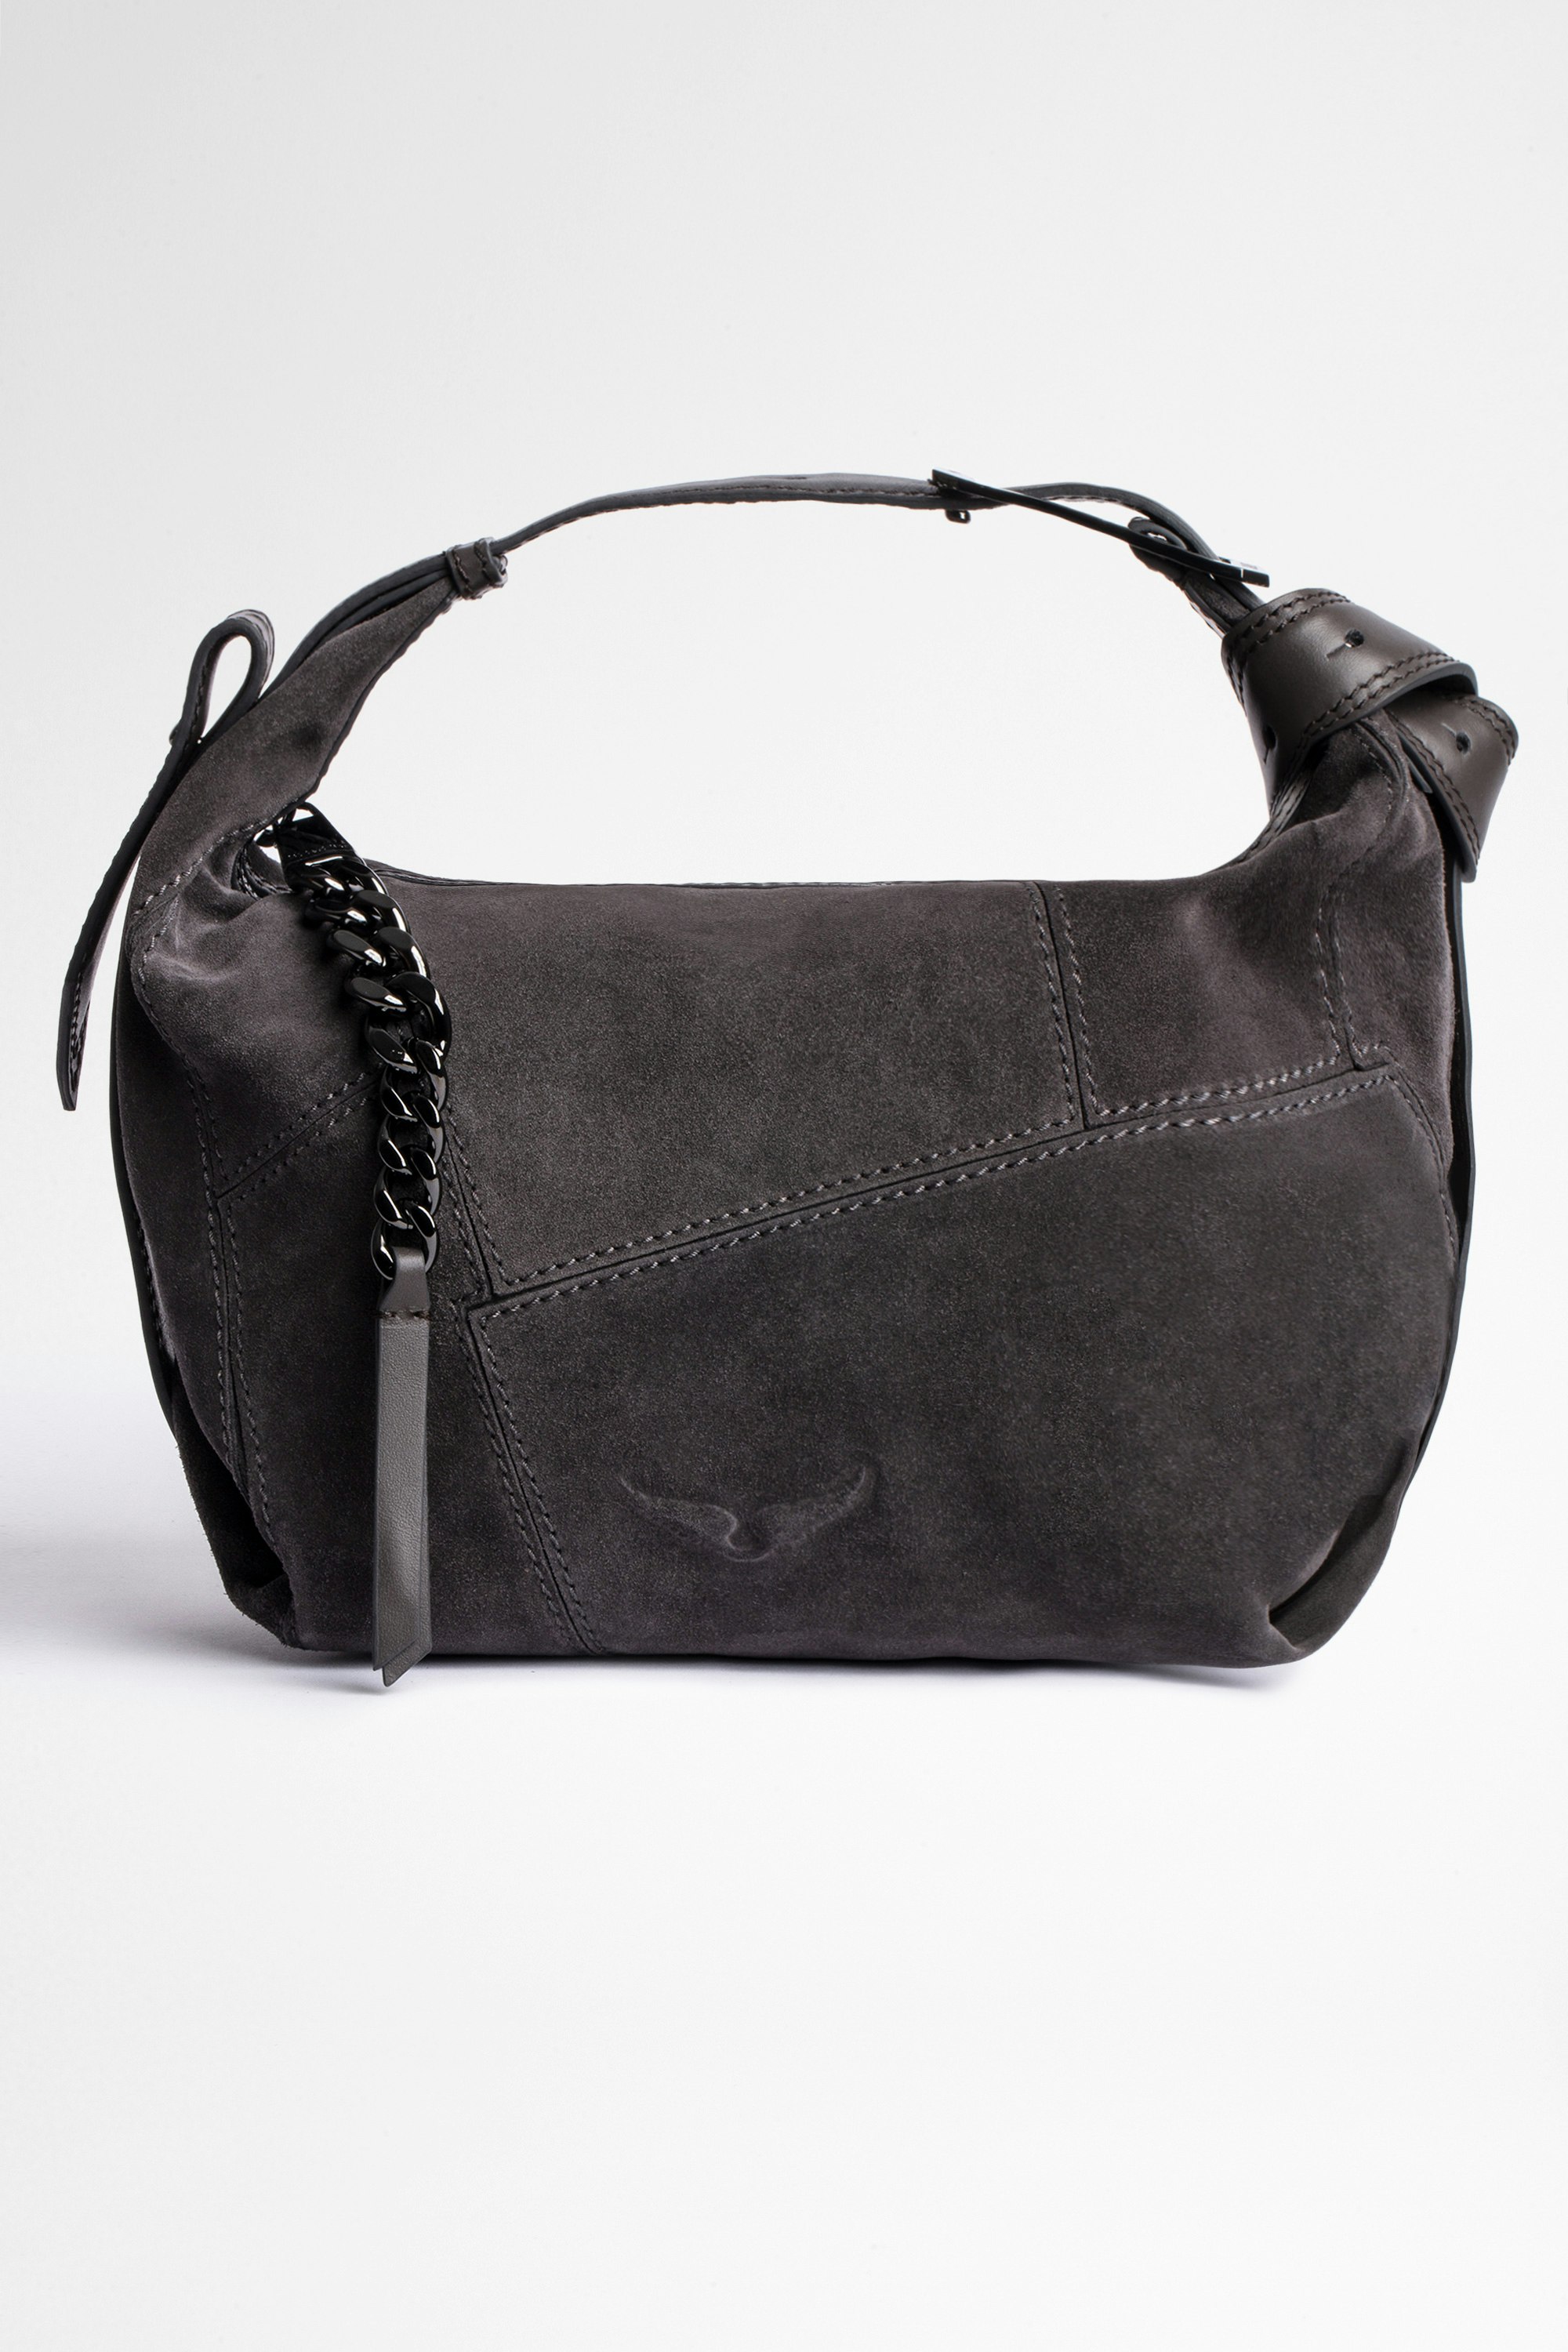 Le Cecilia スエードバッグ Women's gray suede patchwork shoulder bag or crossbody bag